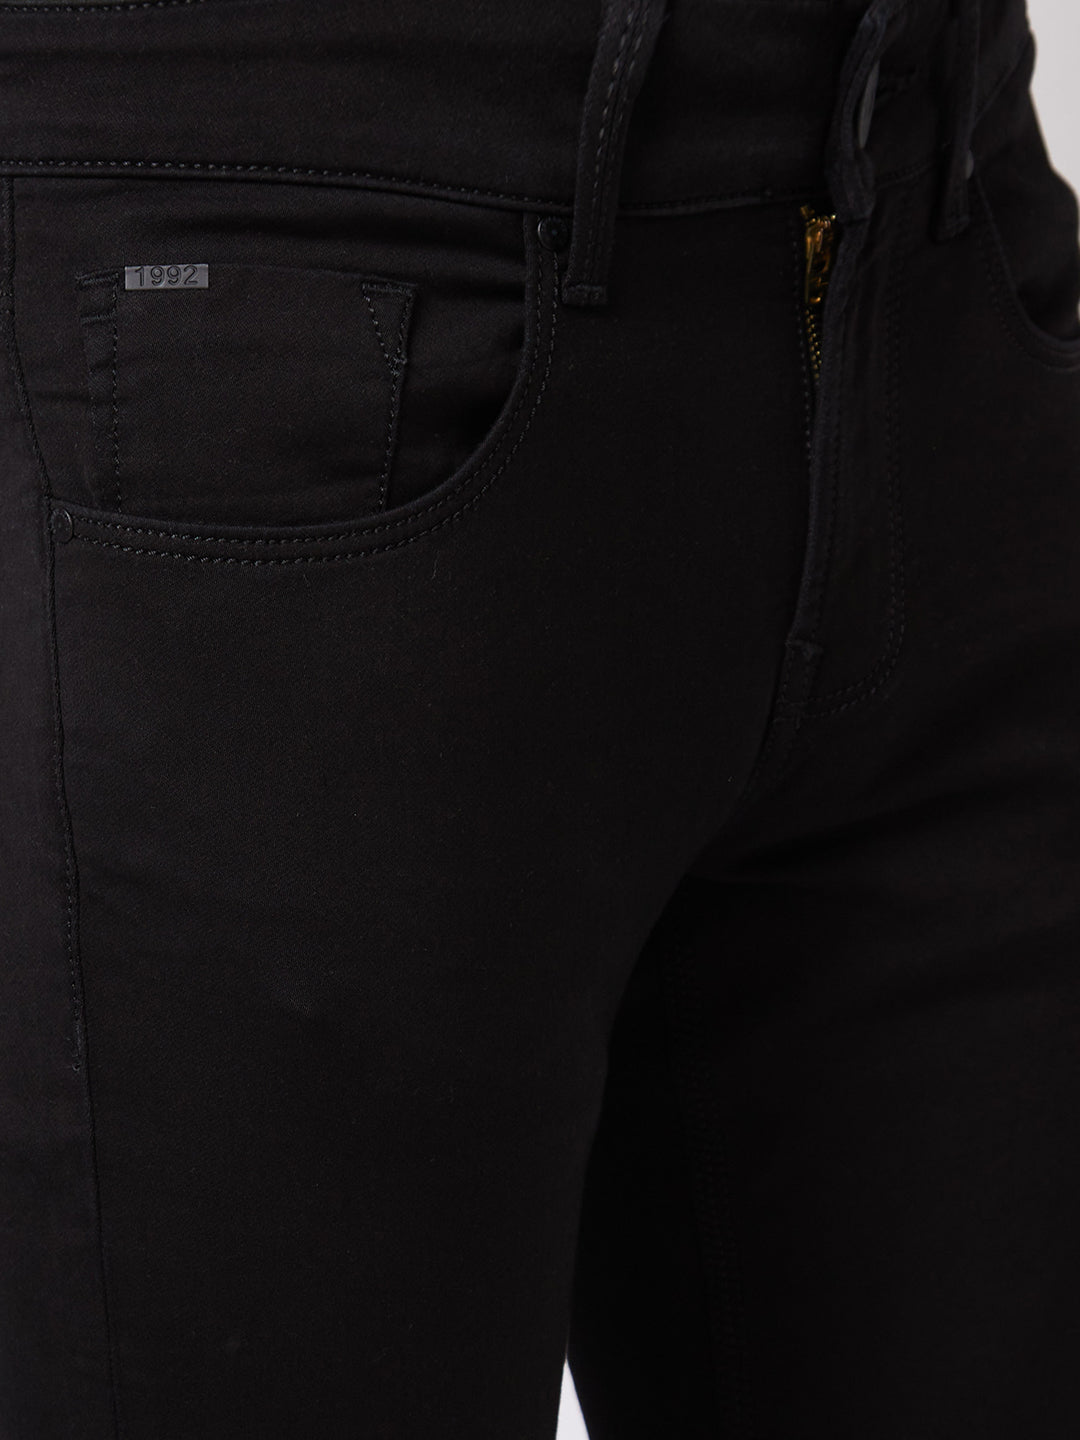 Spykar Low Rise Skinny Fit Black Jeans For Men